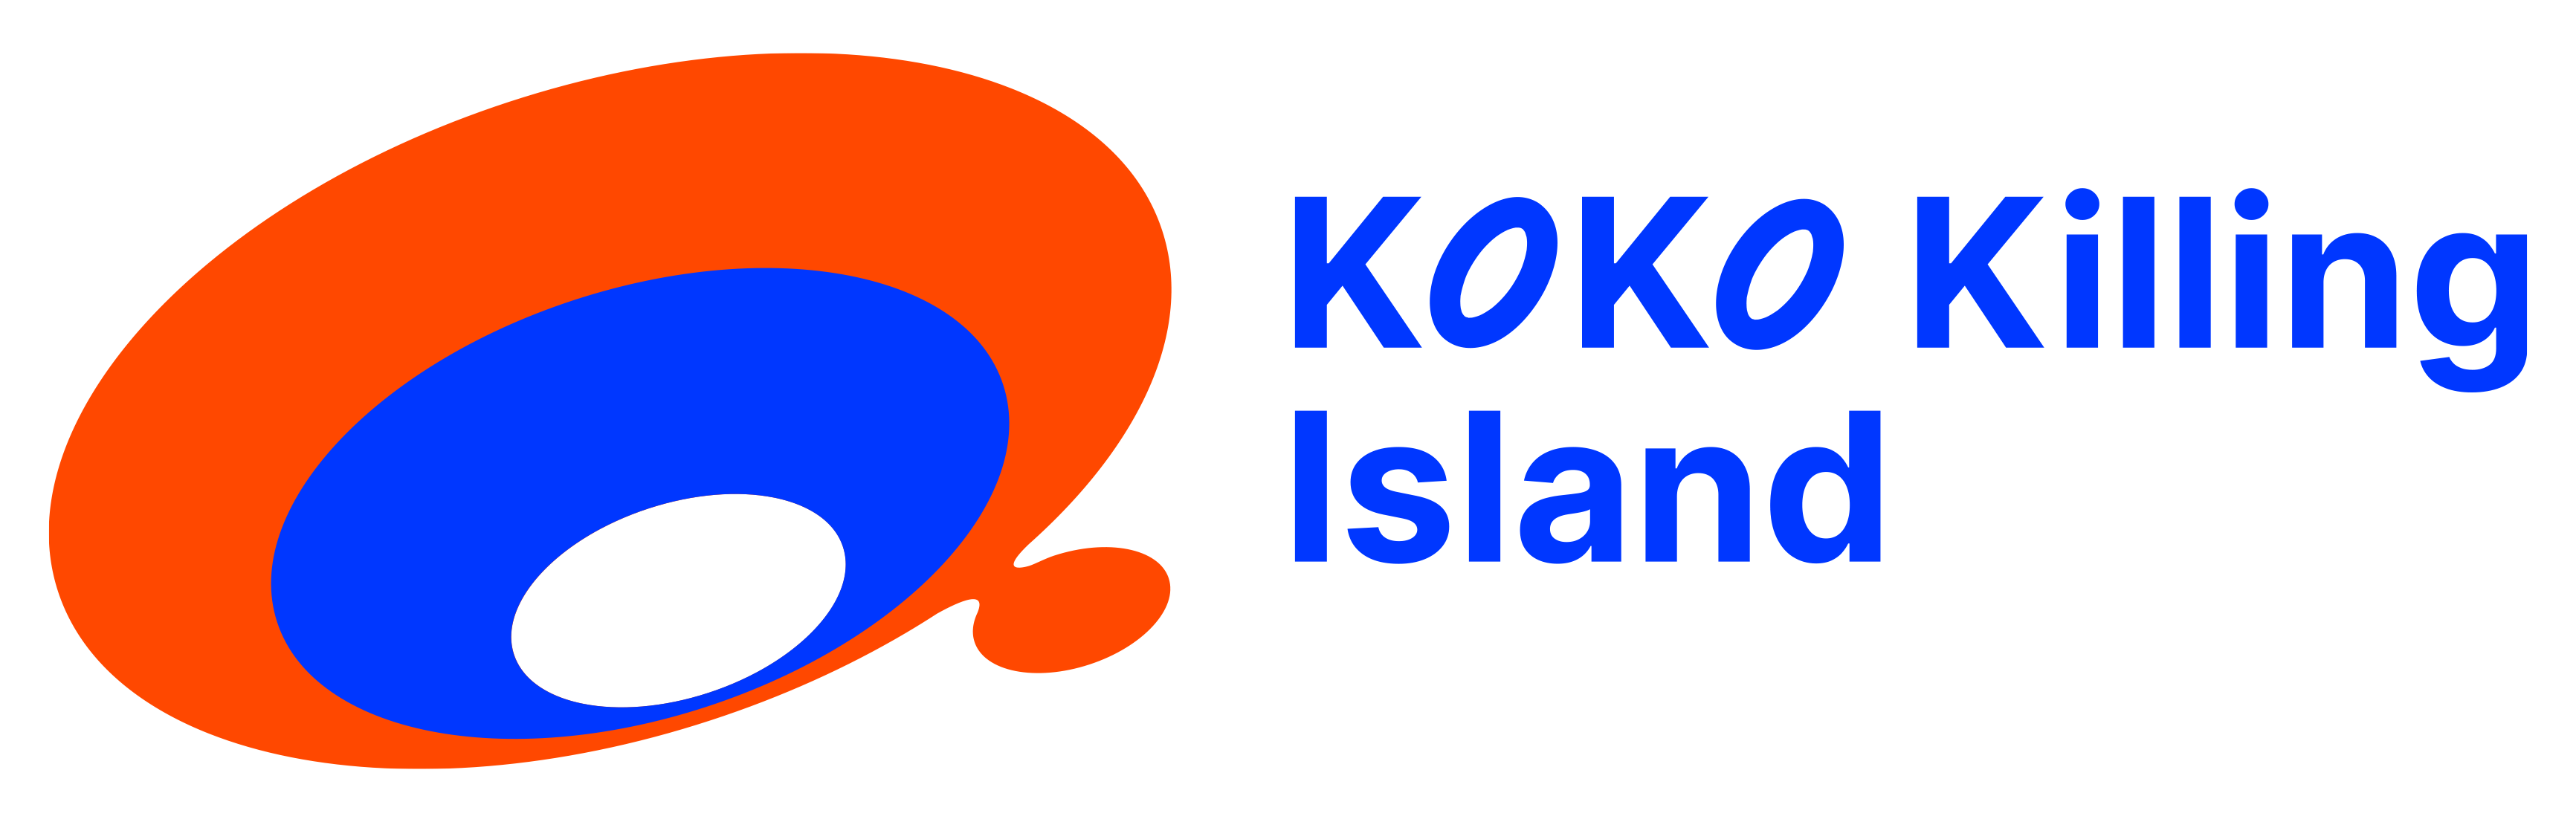 footer-logo-kkk